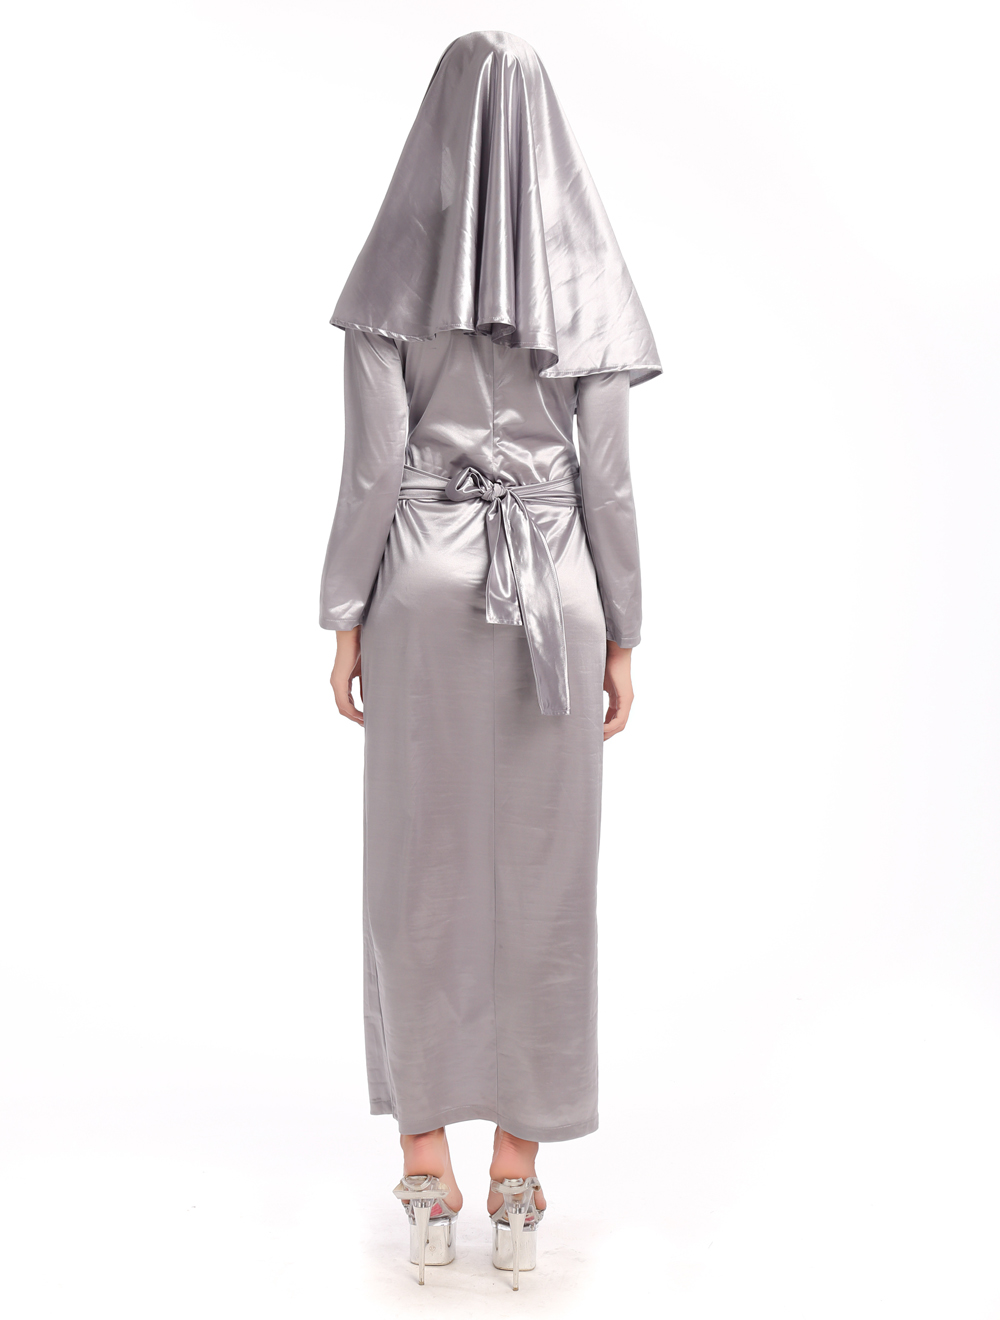 F1694 silver zombie nun costume.it comes with headband,dress,cross